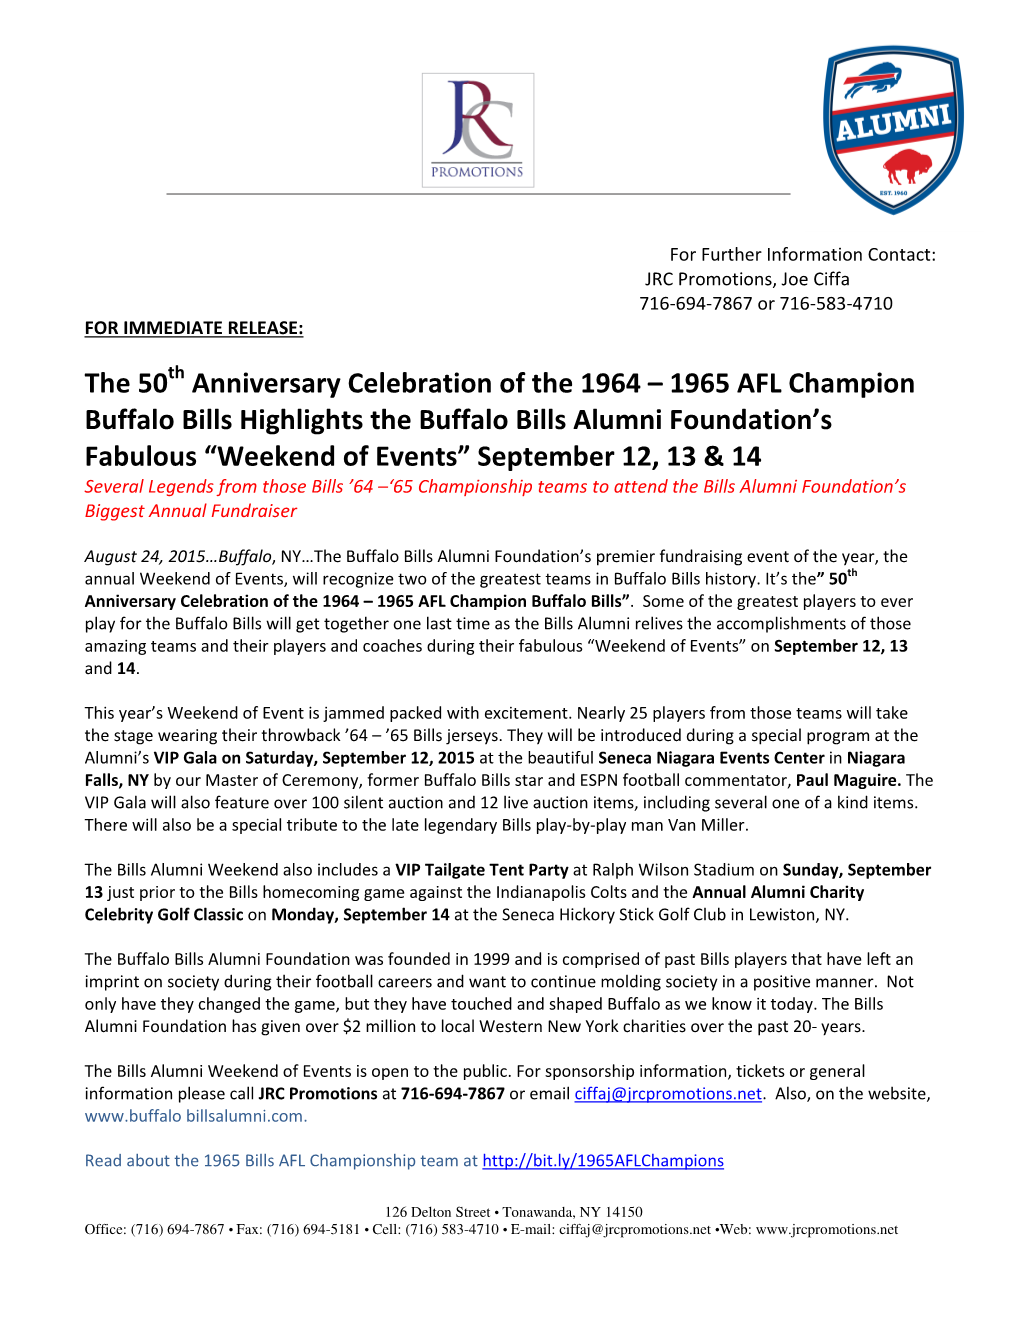 Anniversary Celebration of the 1964 1965 AFL Champion Buffalo Bills